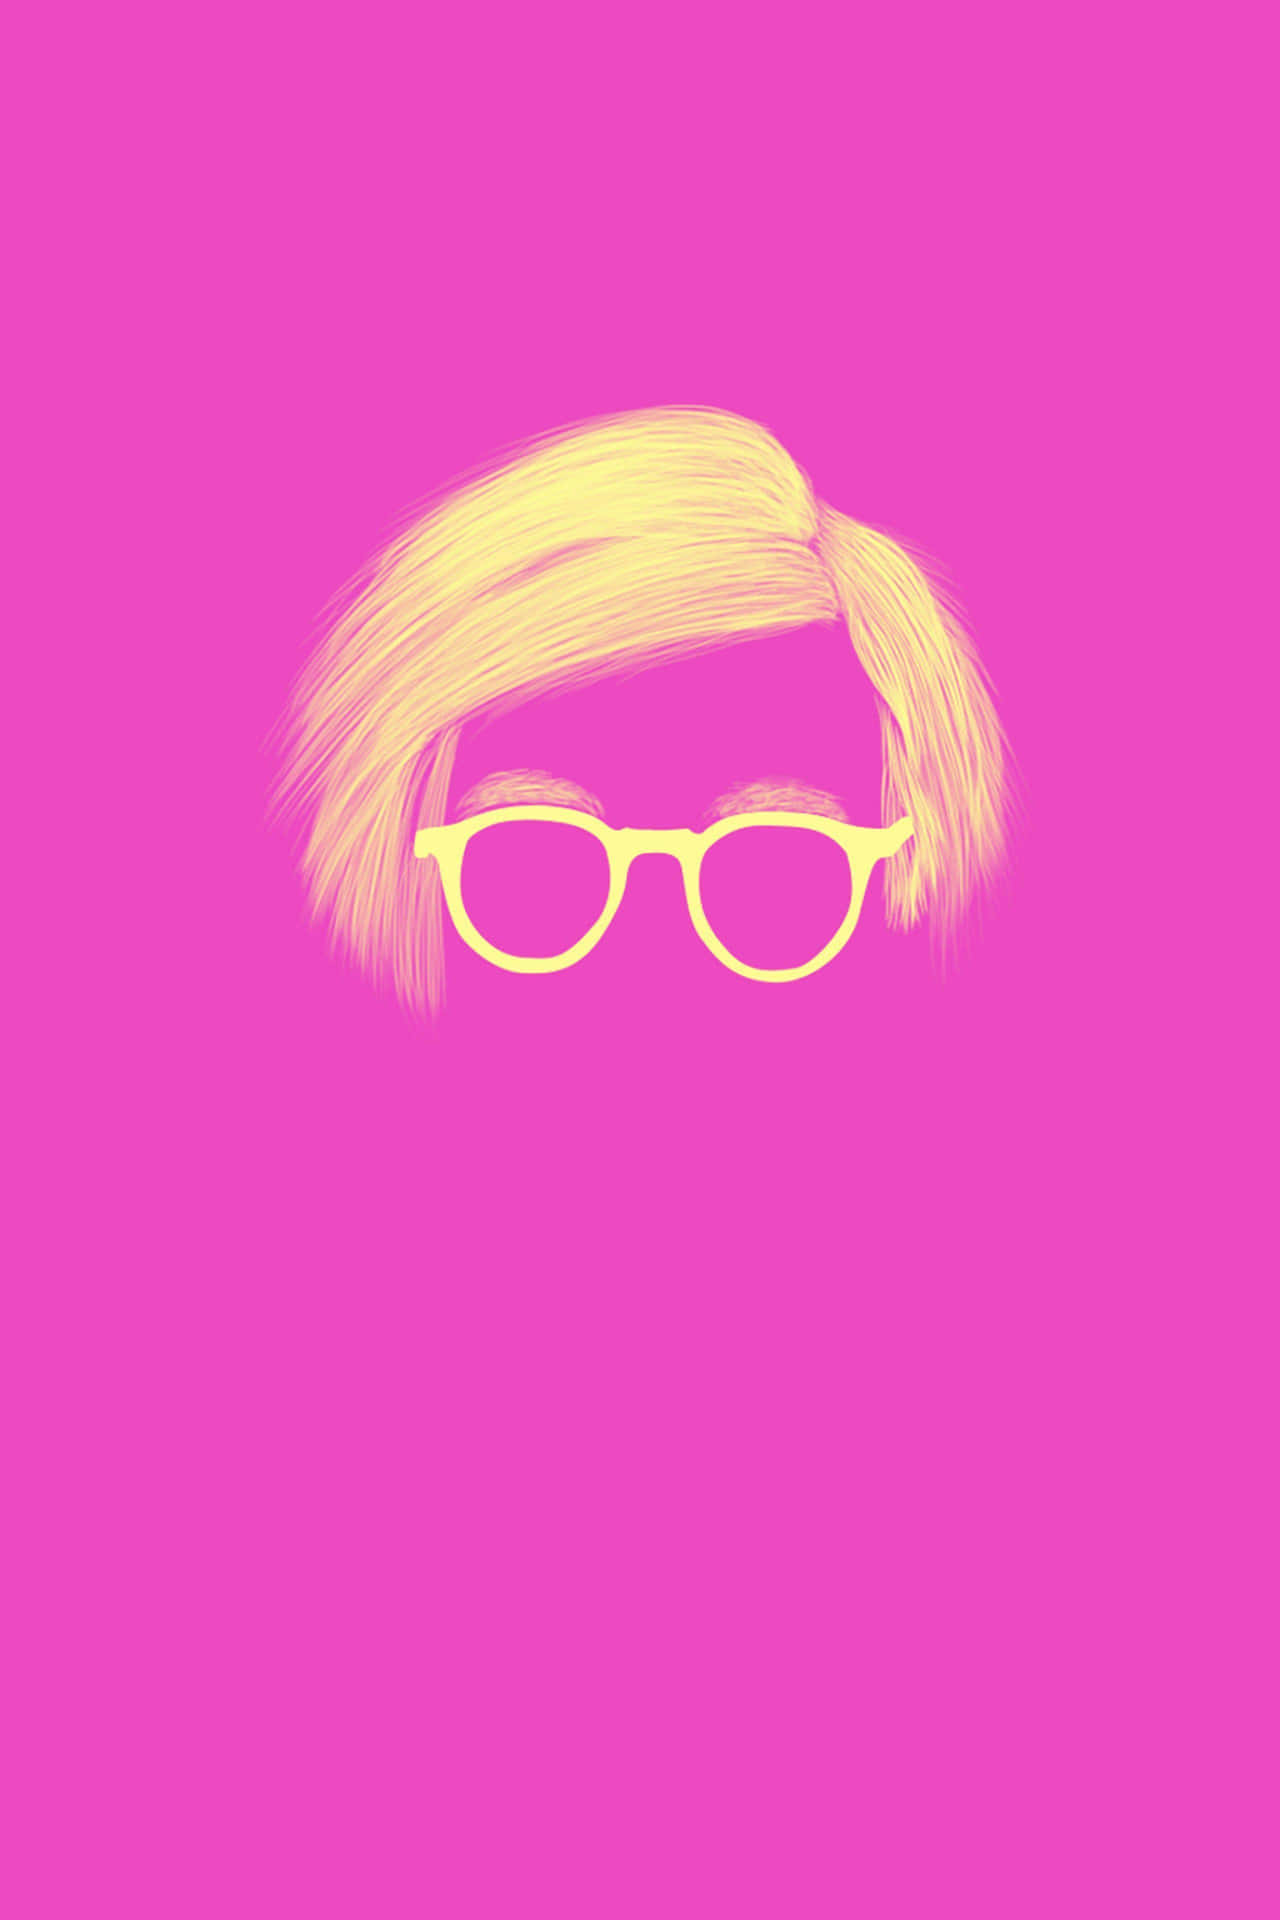 Andy Warhol 2560 X 3840 Wallpaper